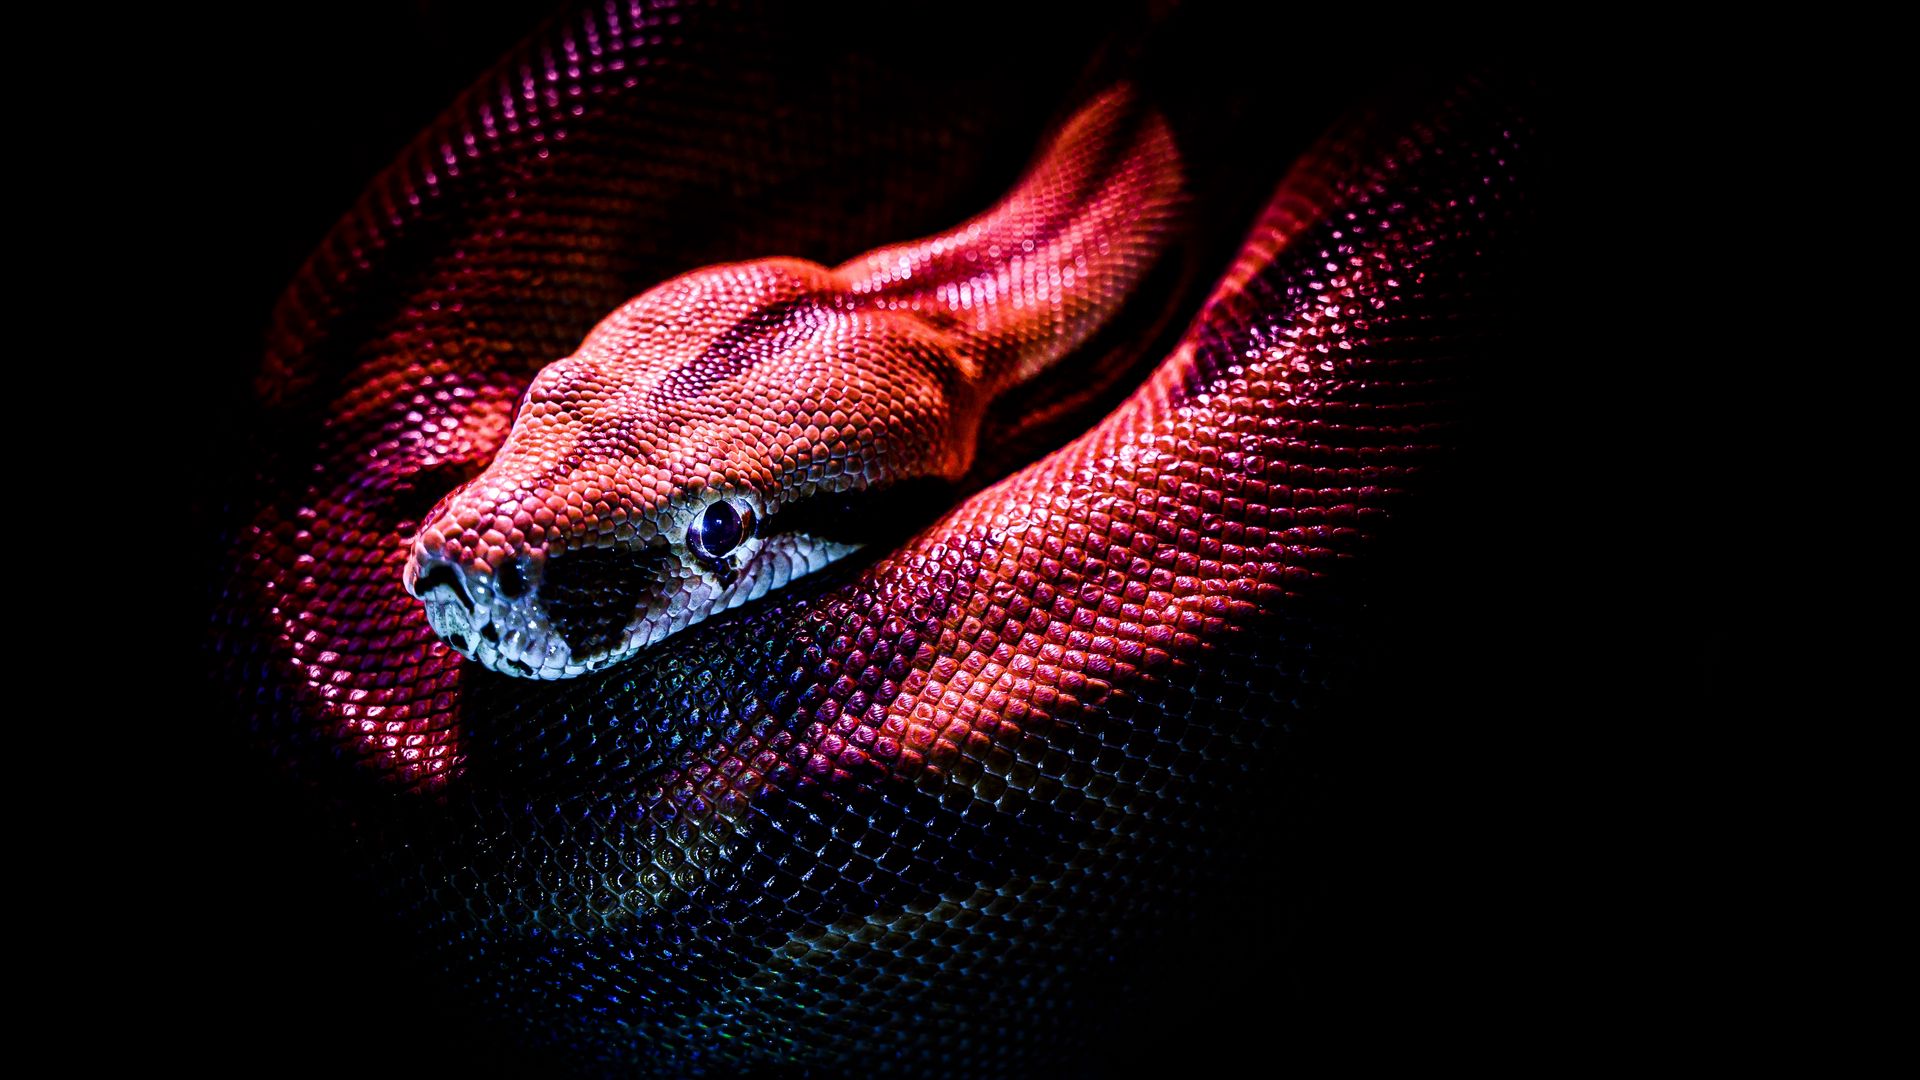 Download wallpaper 1920x1080 snake, reptile, red, dark ...